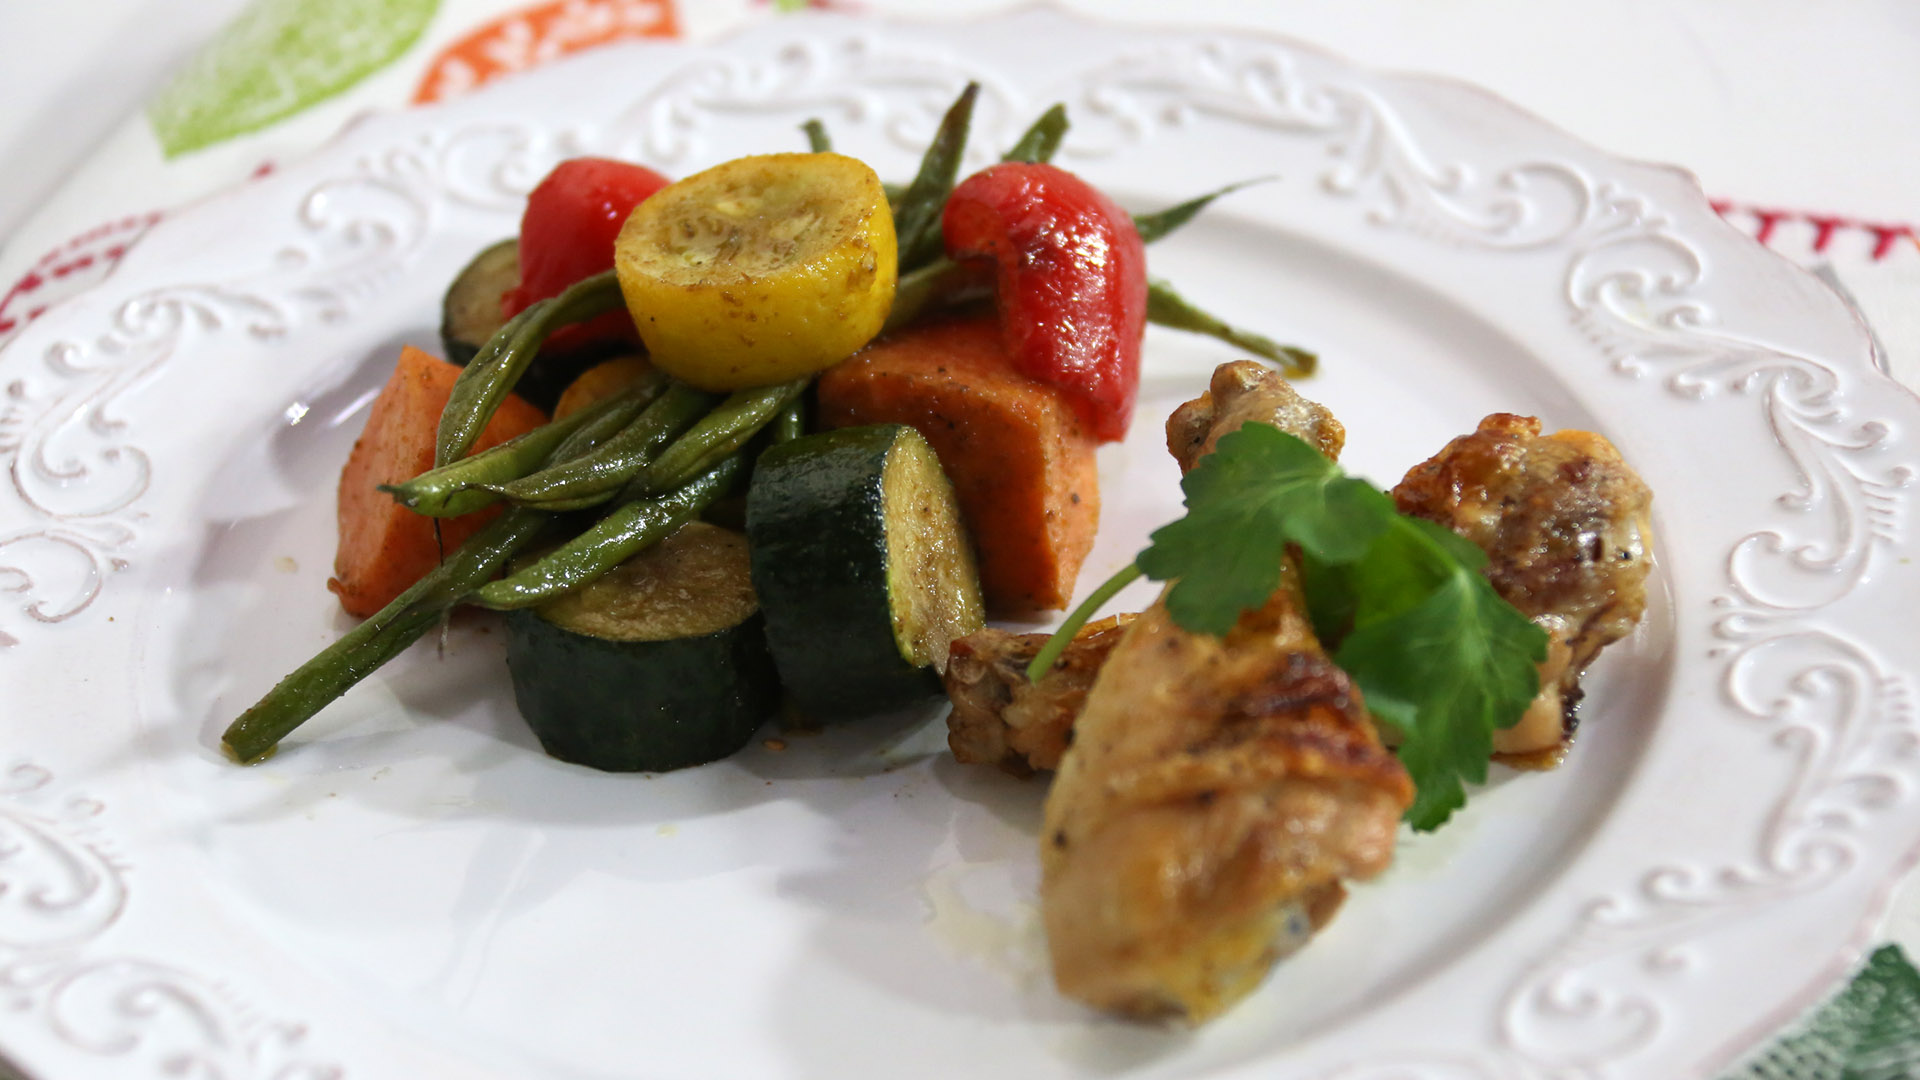 Veggie sheet pan dinner with chicken or salmon